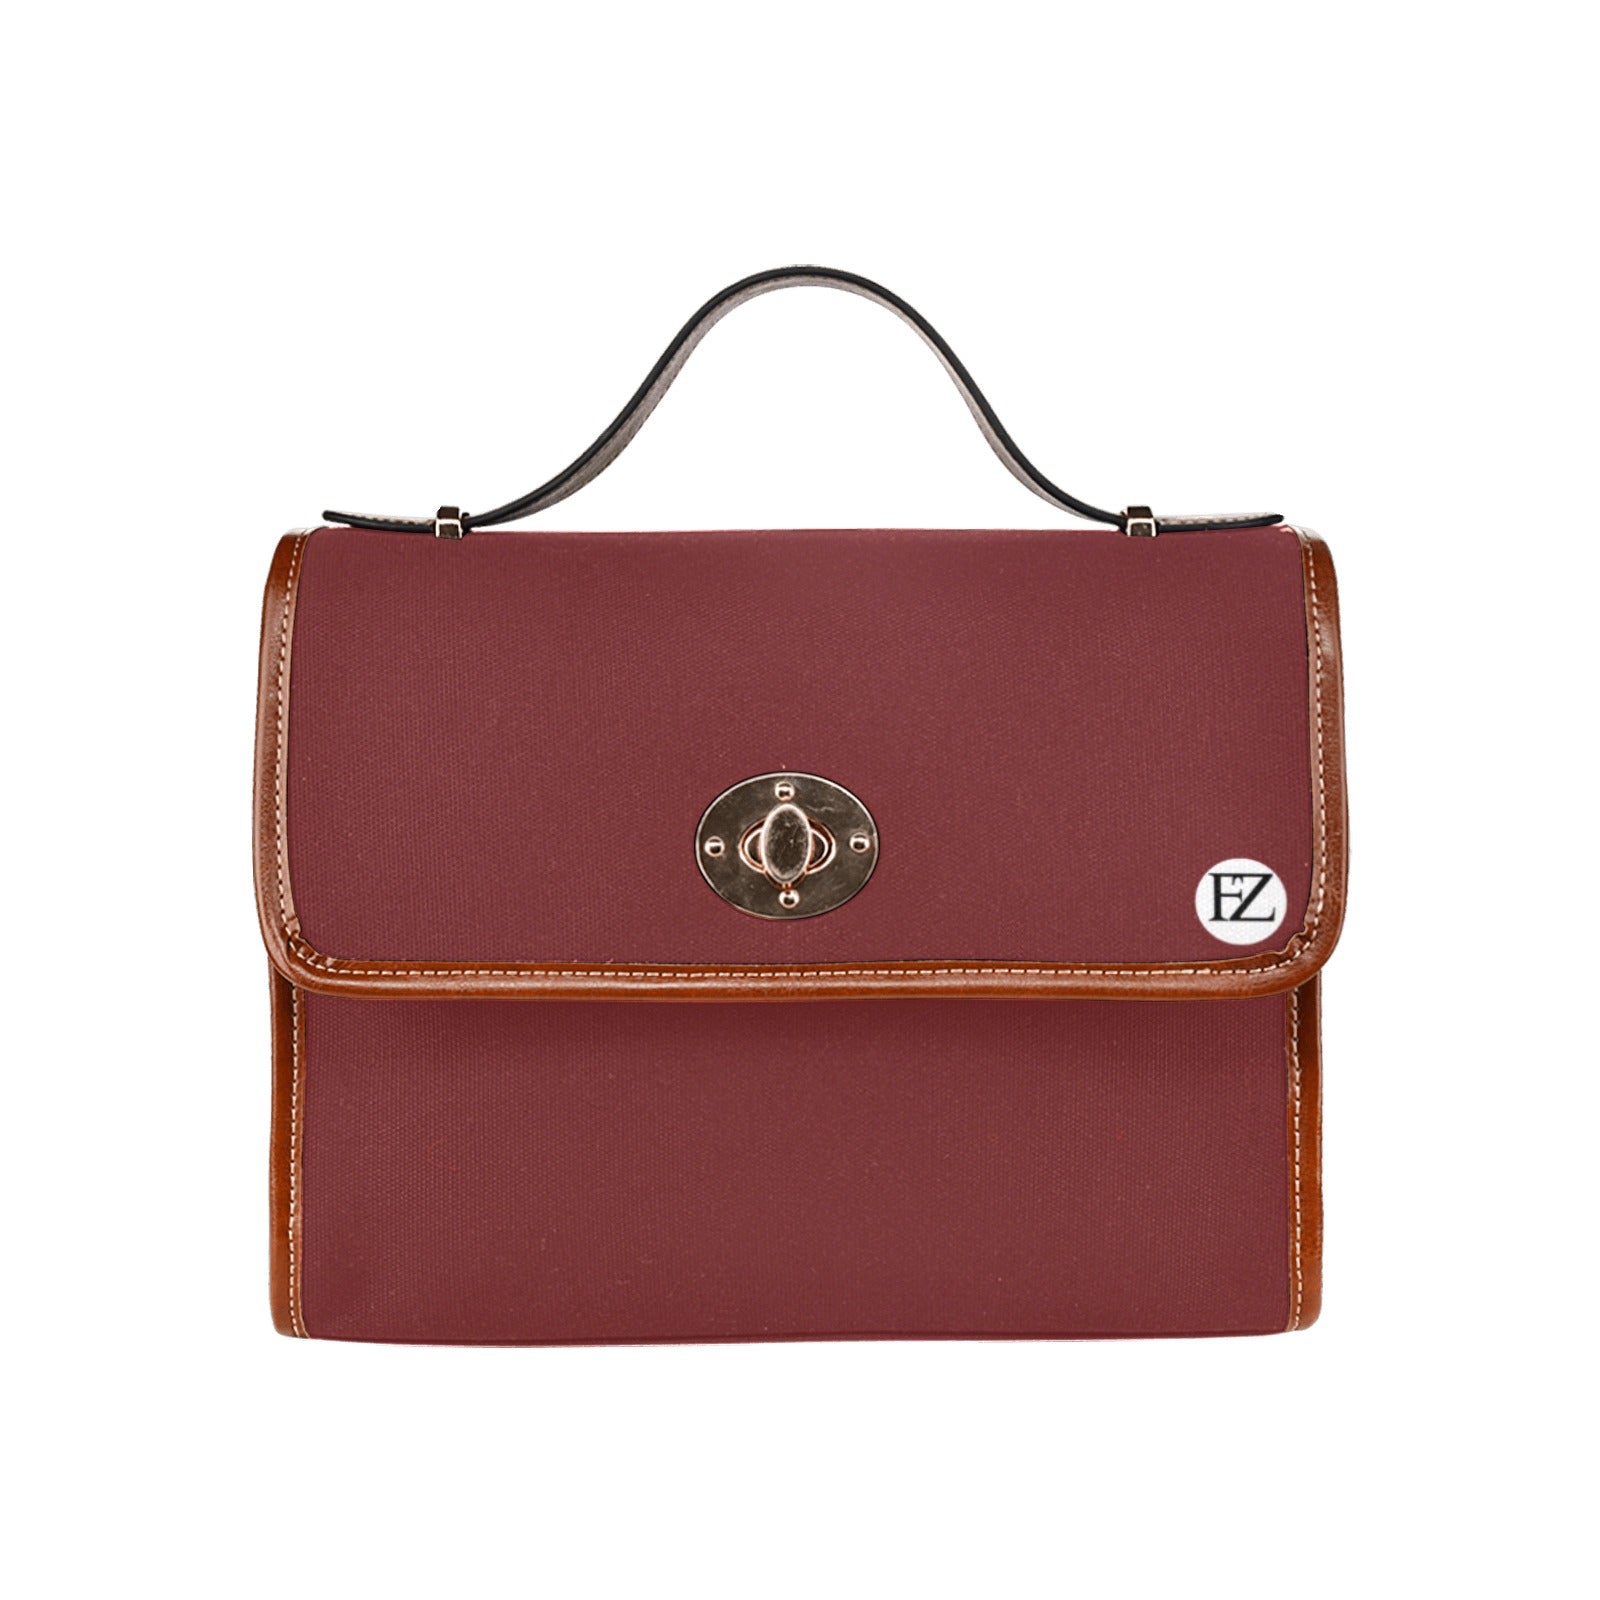 fz original handbag one size / fz - burgundy all over print waterproof canvas bag(model1641)(brown strap)